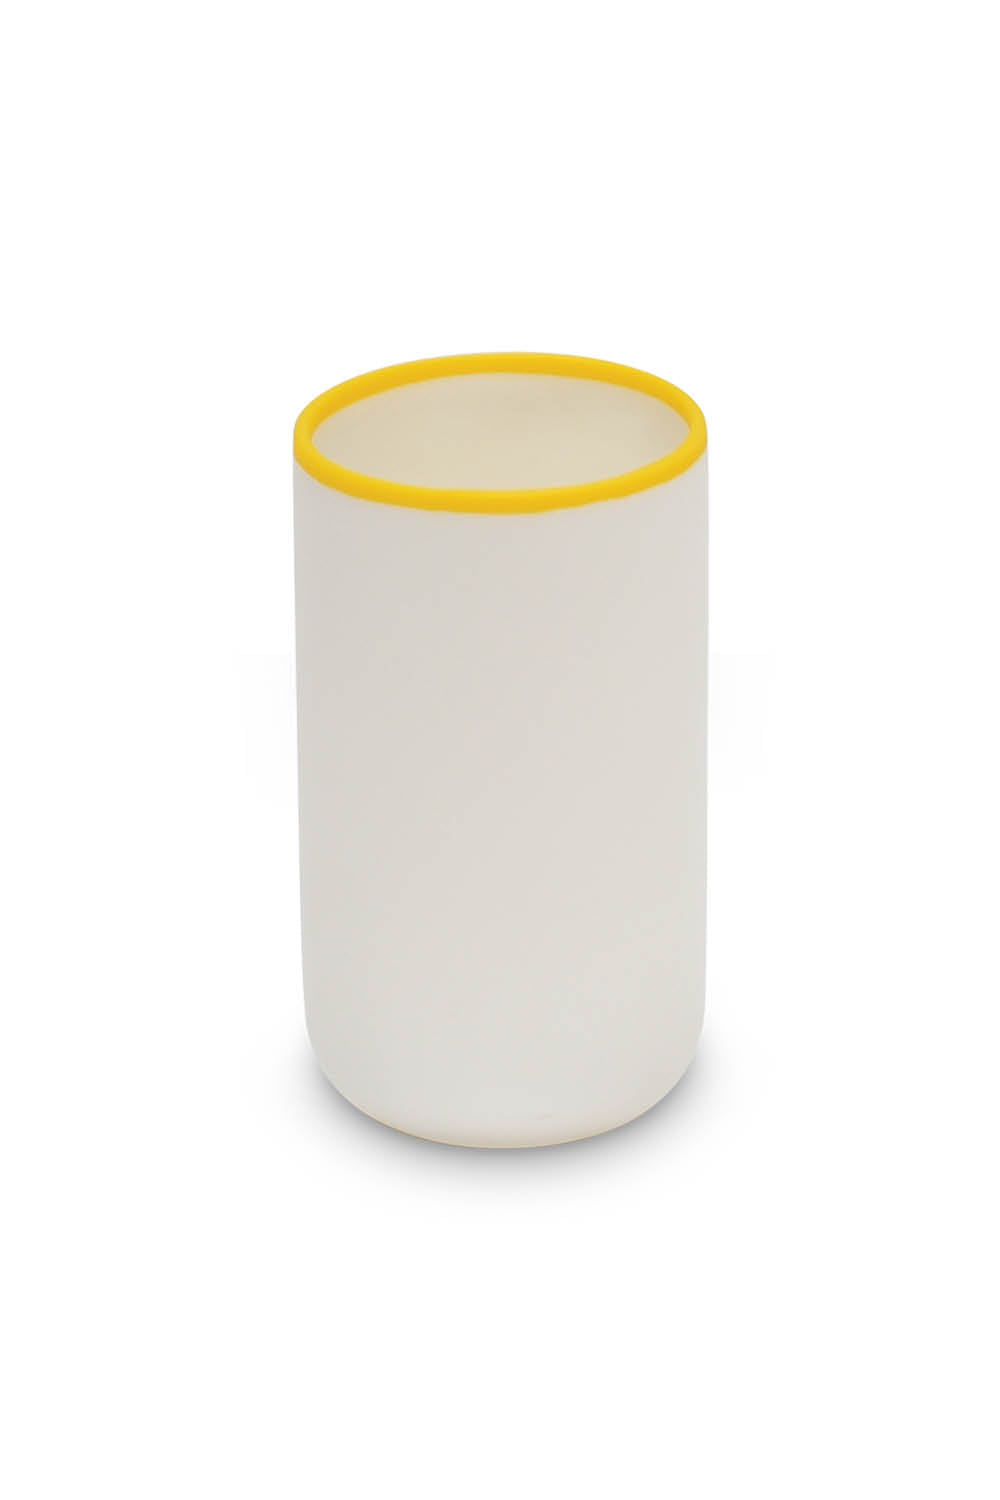 LIGNE Cylinder Vase in White With Sunshine Yellow Rim